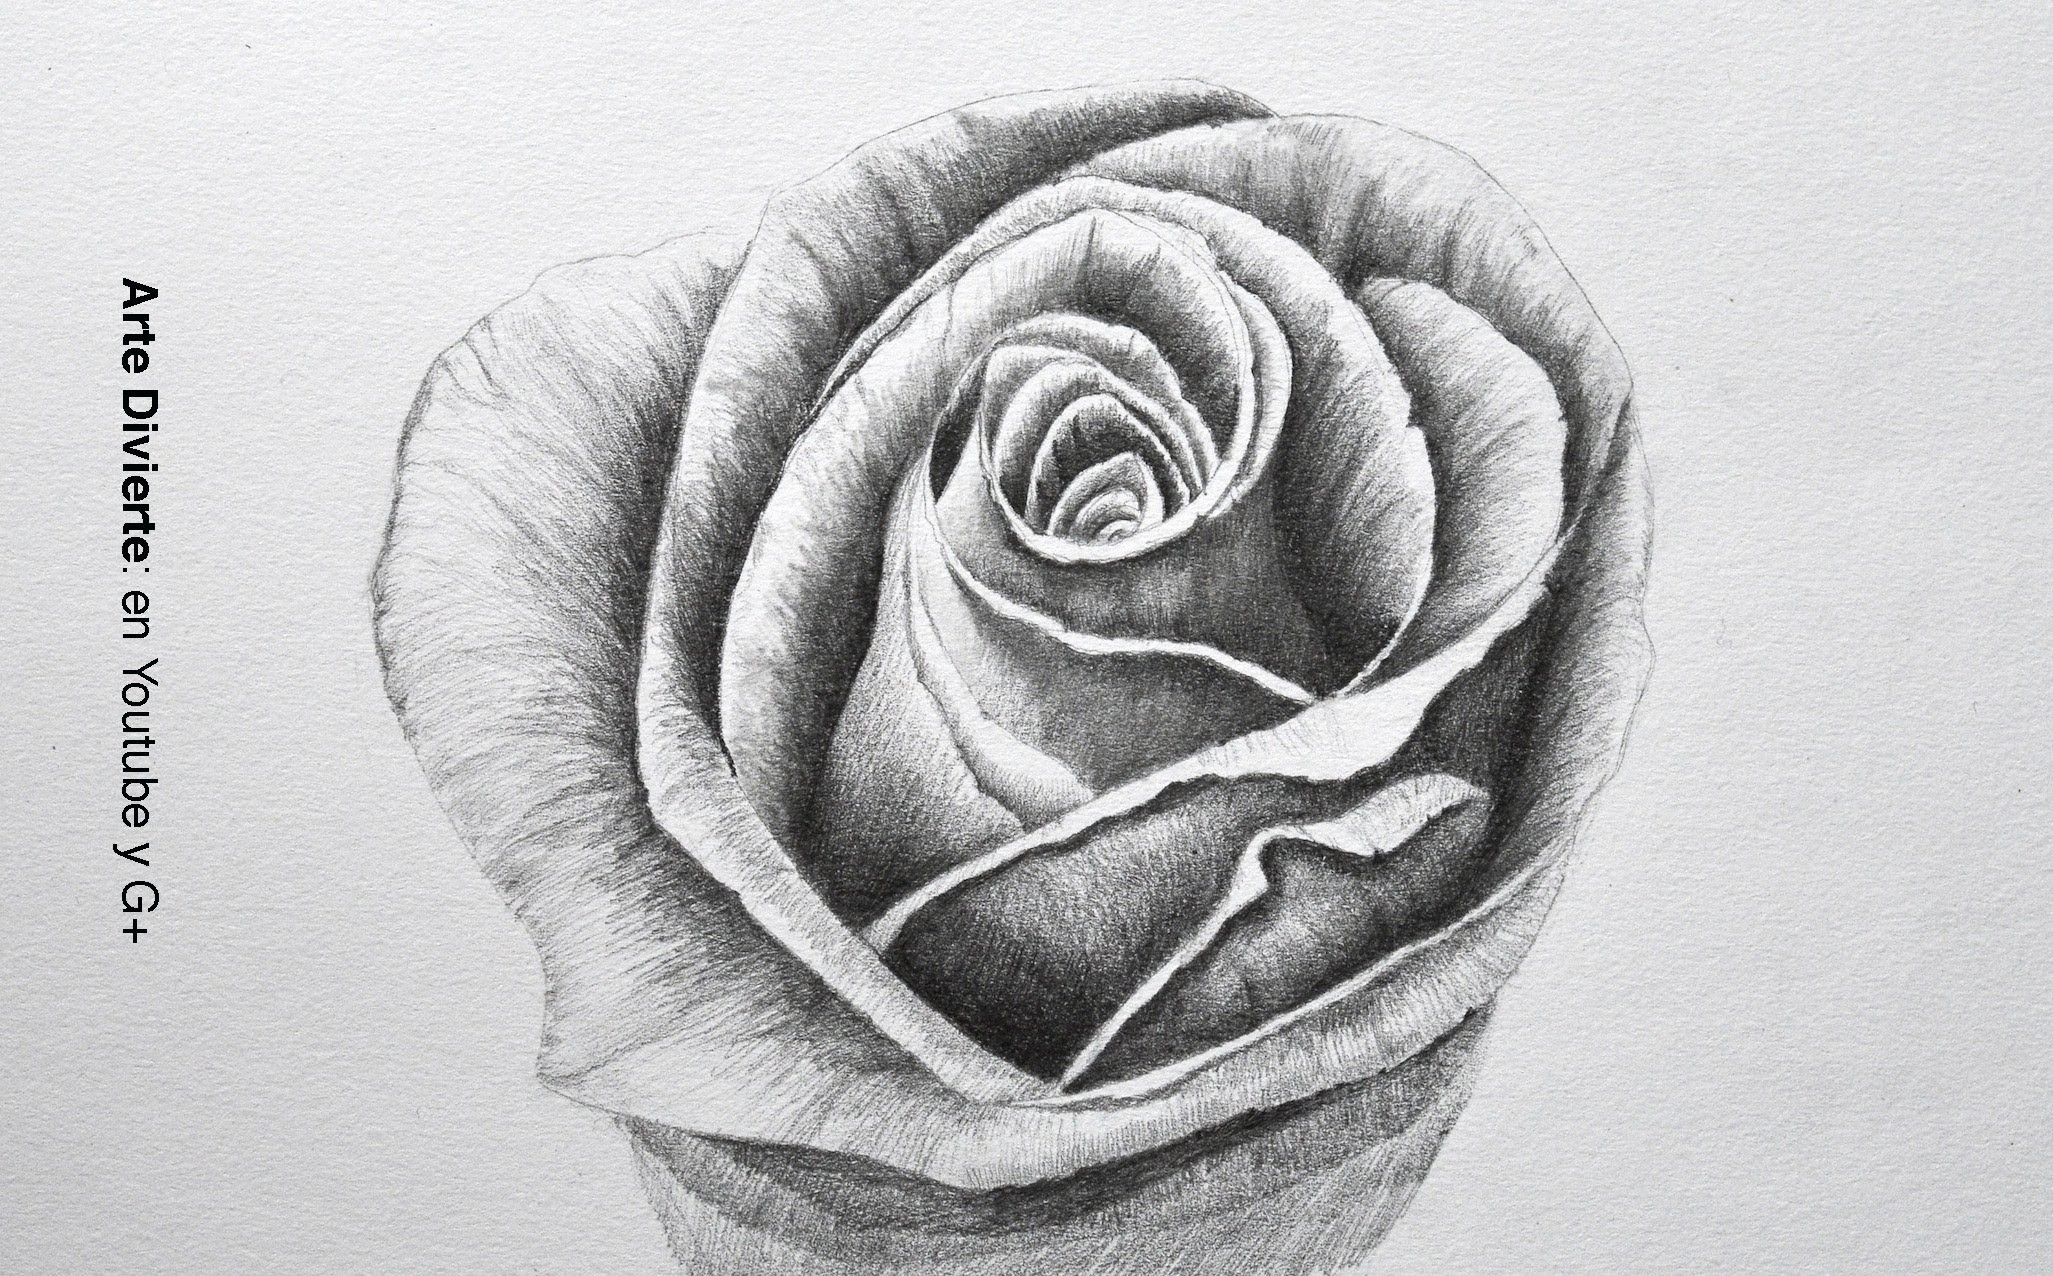 Dibujando flores: cómo dibujar una rosa a lápiz - Arte Divierte.